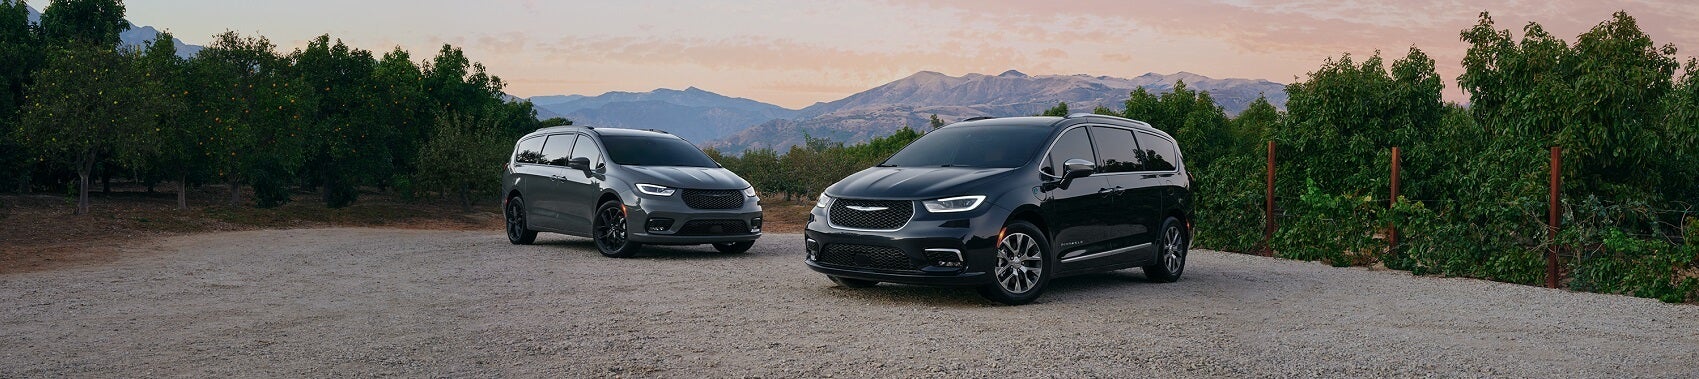 New Chrysler Vehicles for Sale